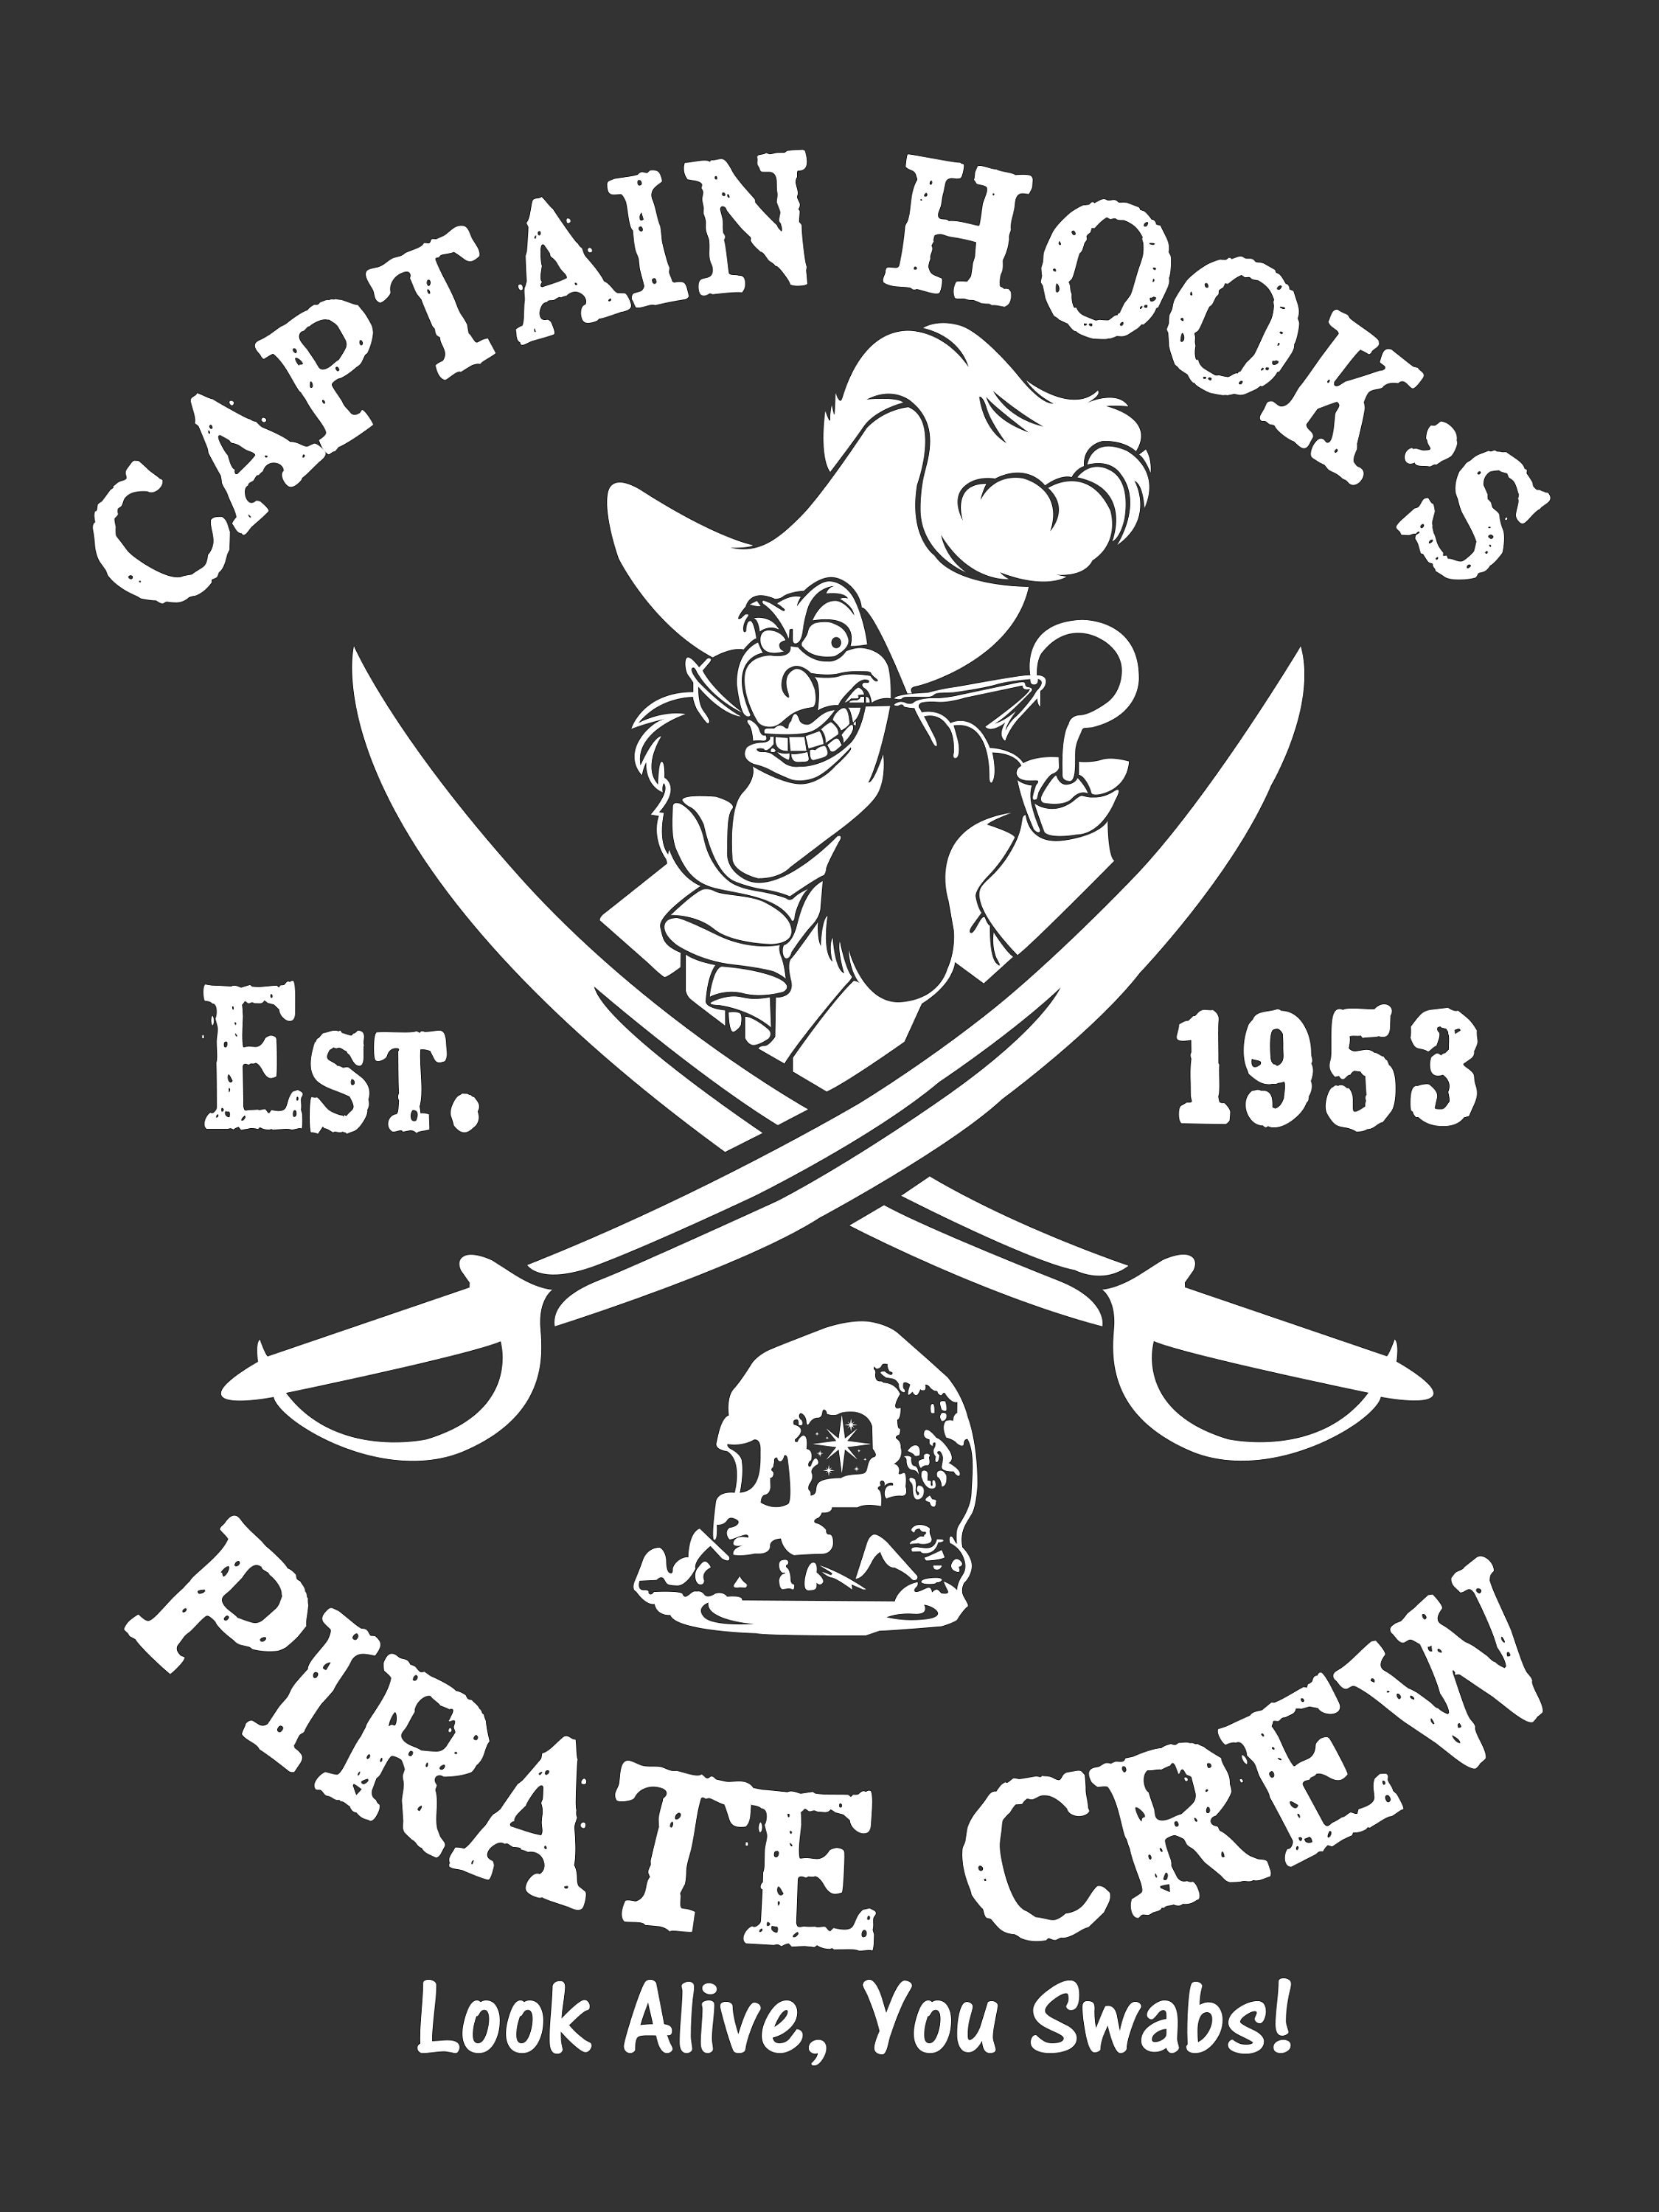 Captain Hooks Crew 